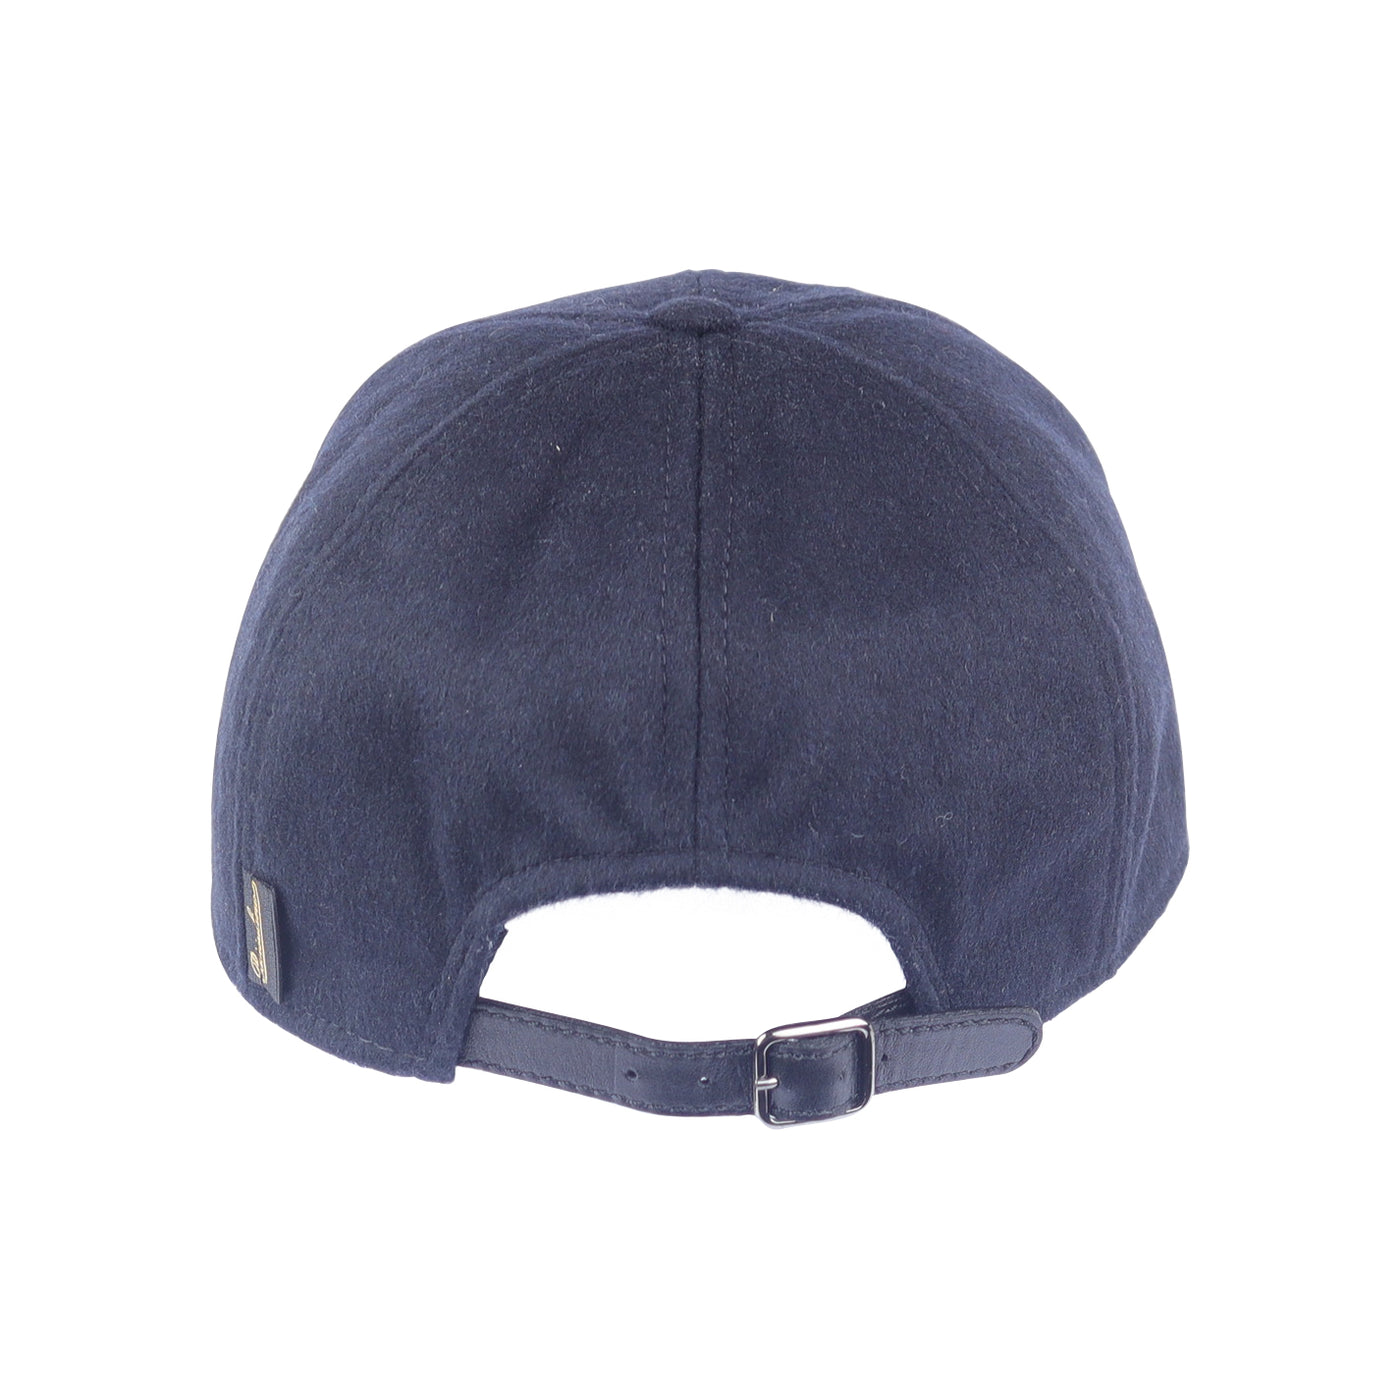 Lana Wool Cap - Navy, product_type] - Borsalino for Atica fedora hat